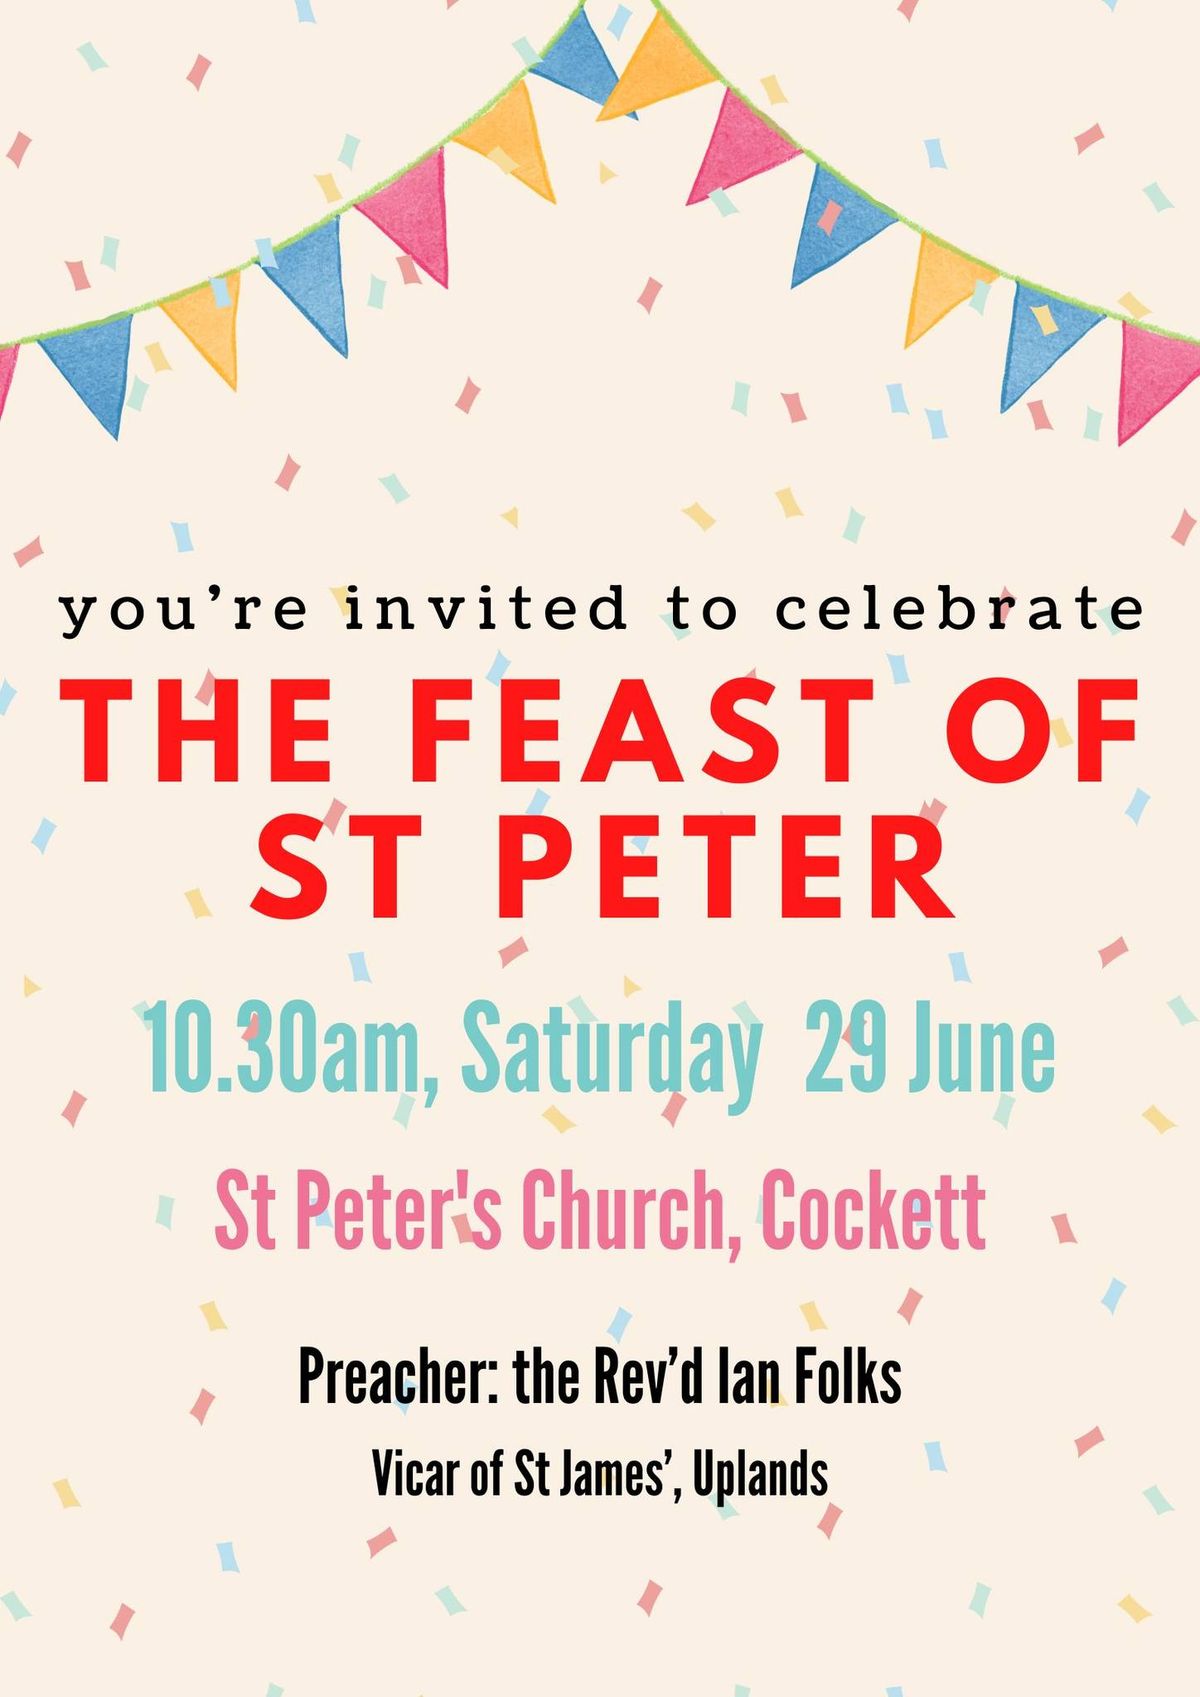 St Peter's Patronal Festival